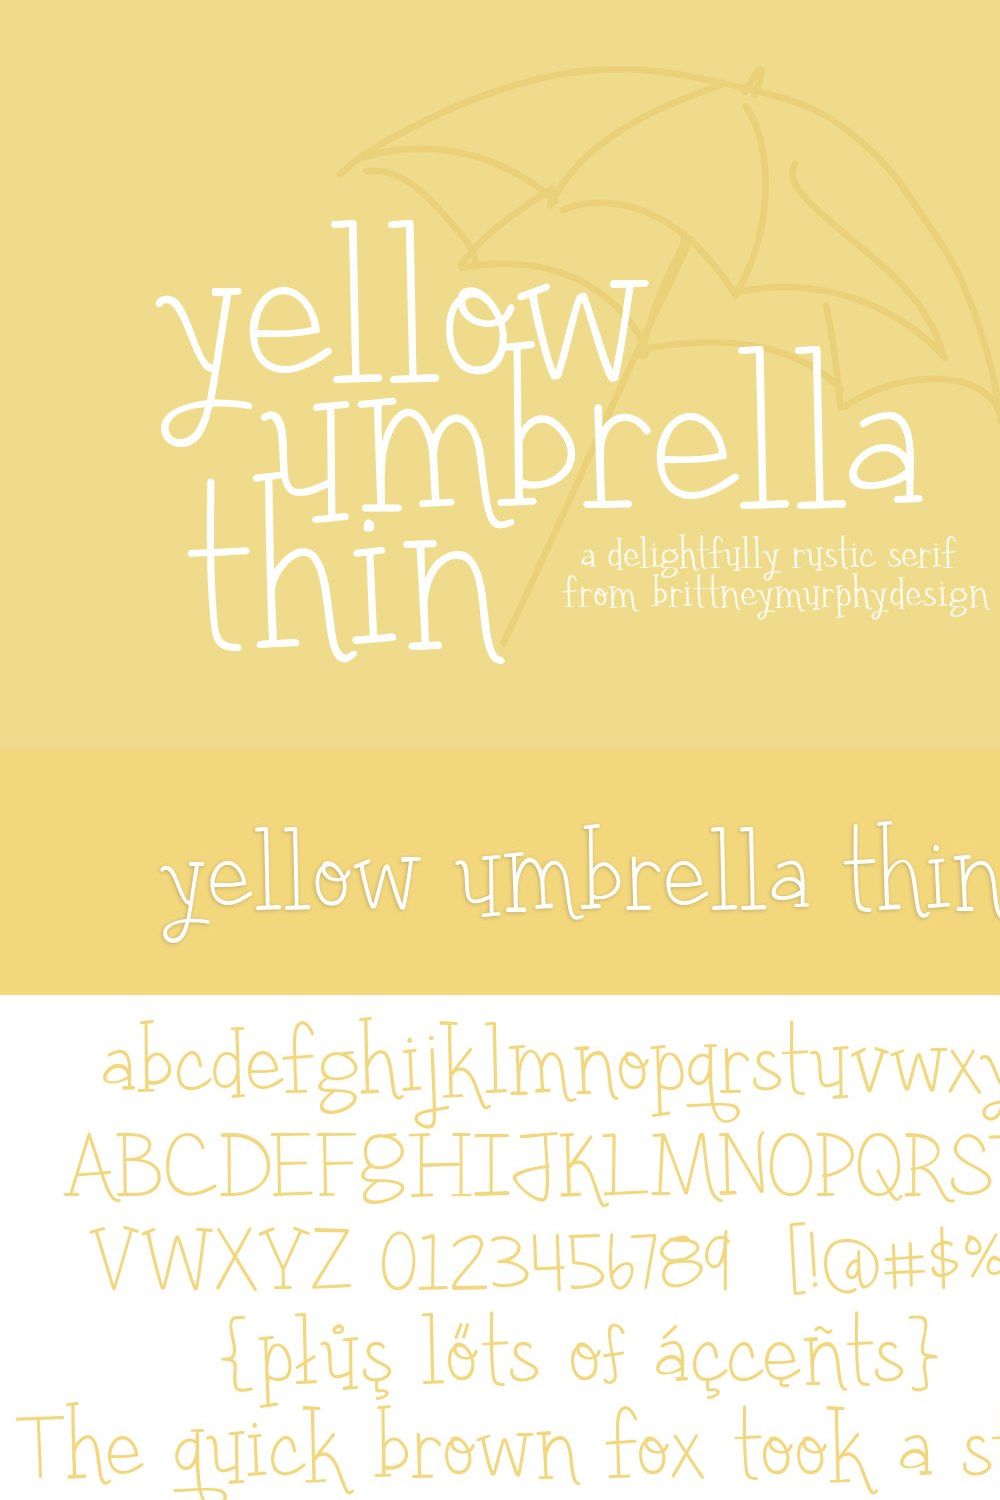 Yellow Umbrella Thin pinterest preview image.